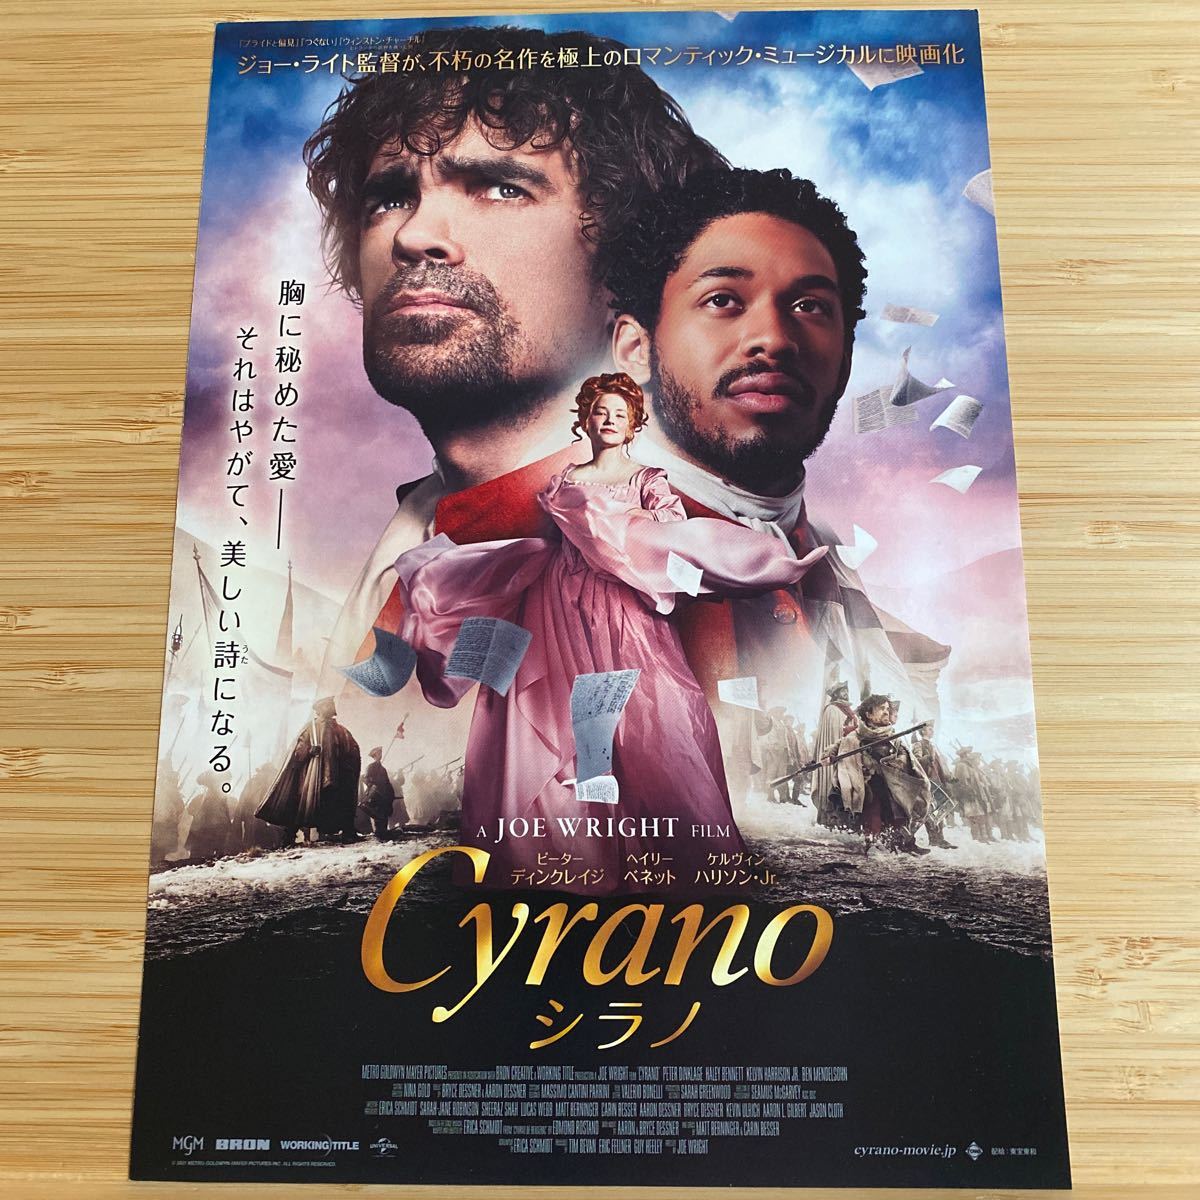 silanocyrano theater version movie leaflet Flyer approximately 18×25.8 JOE WRIGHT Japanese version movie Flyer